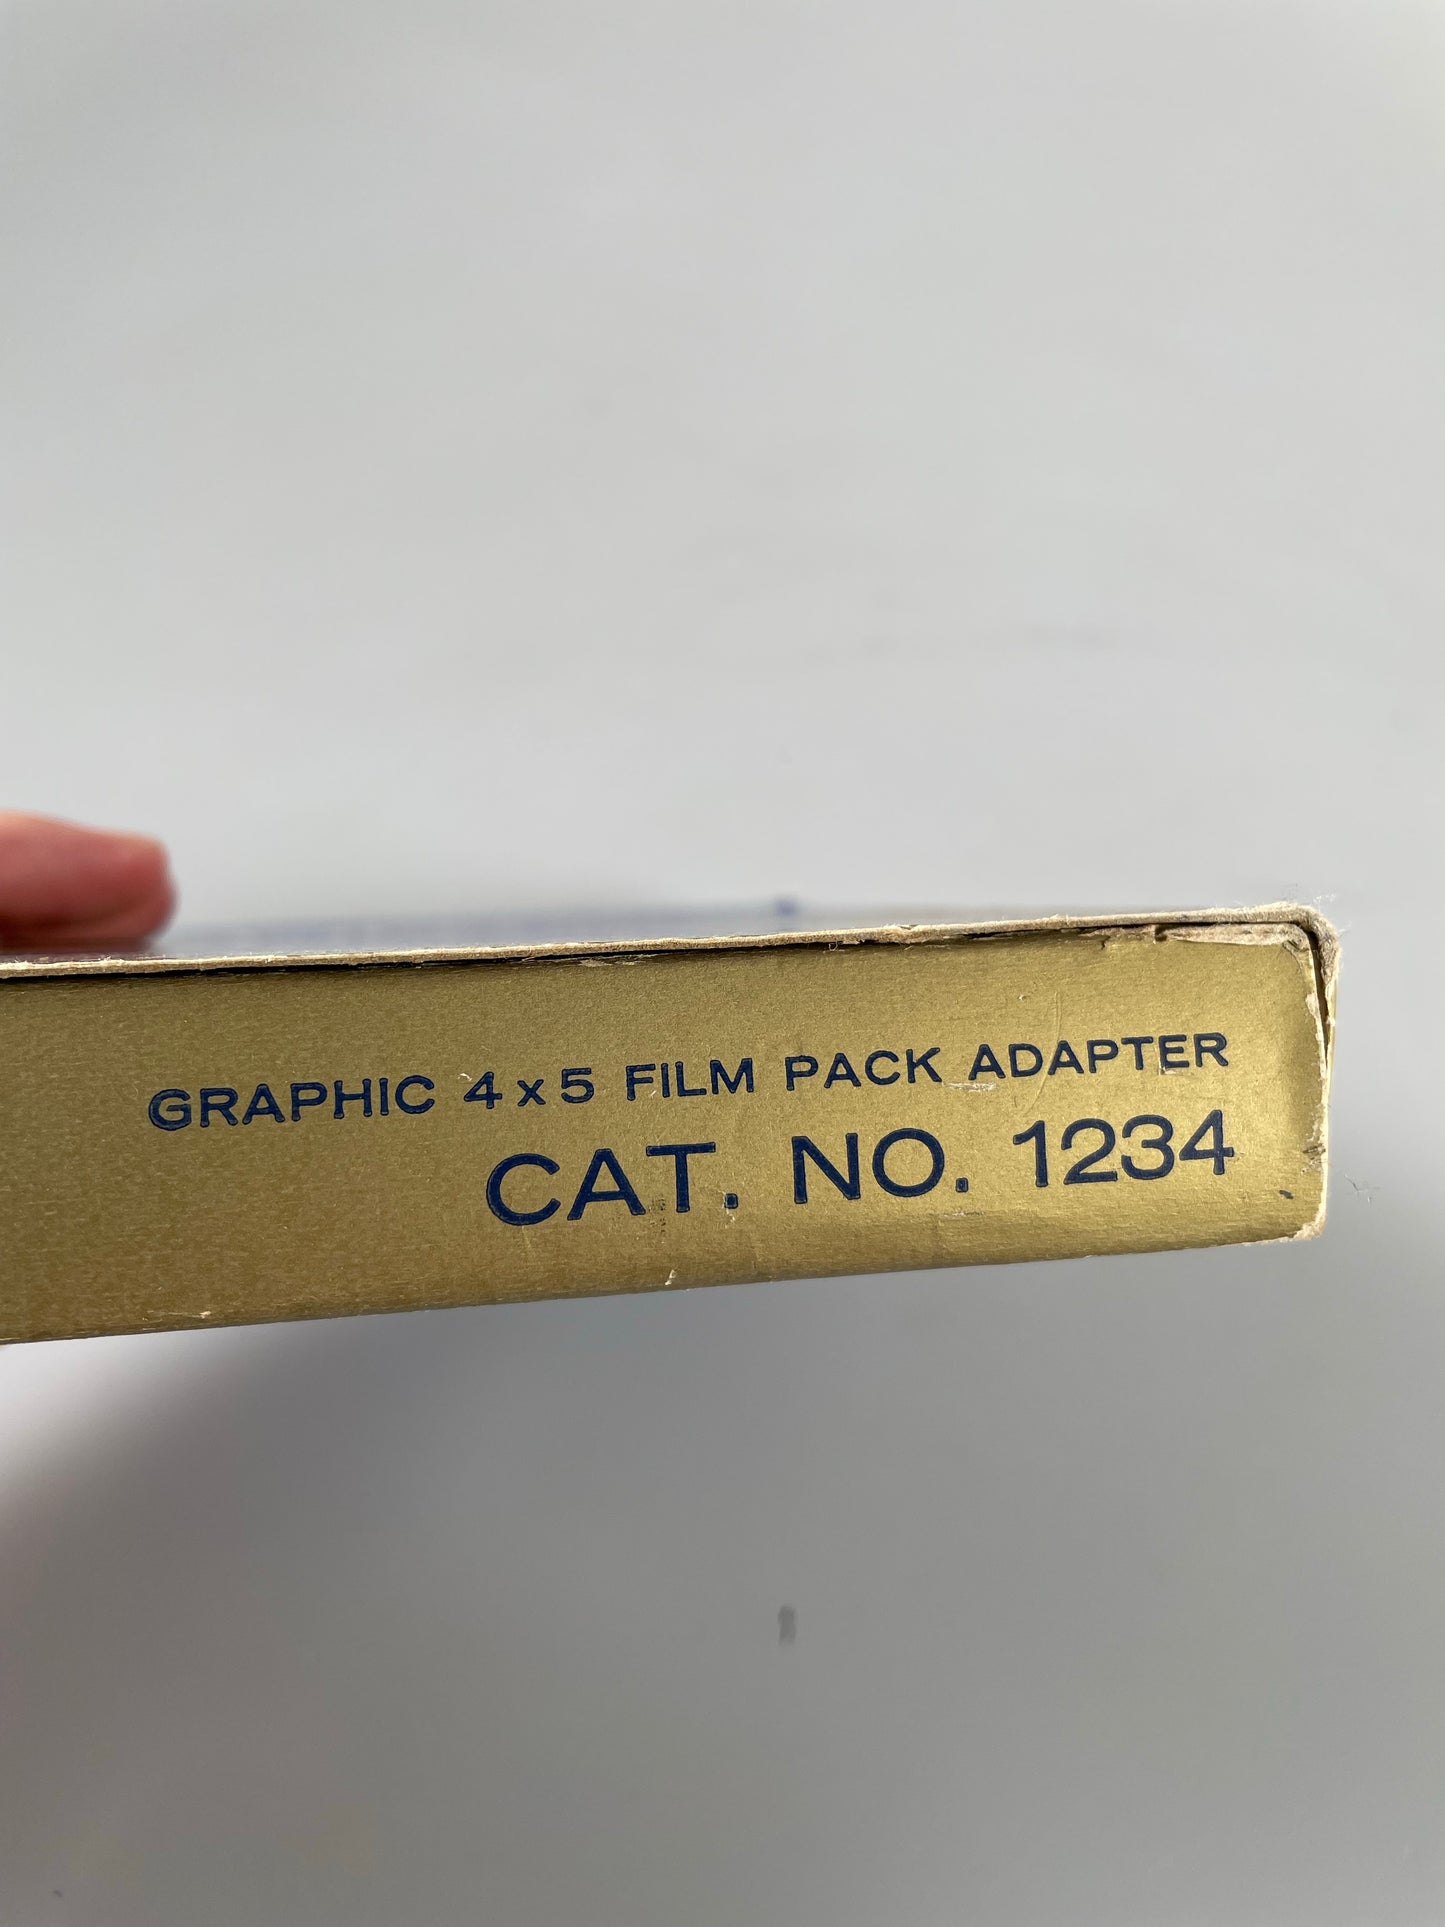 Graflex 4x5 Graphic Film Pack Adapter with Dark Slide Cat. No. 1234